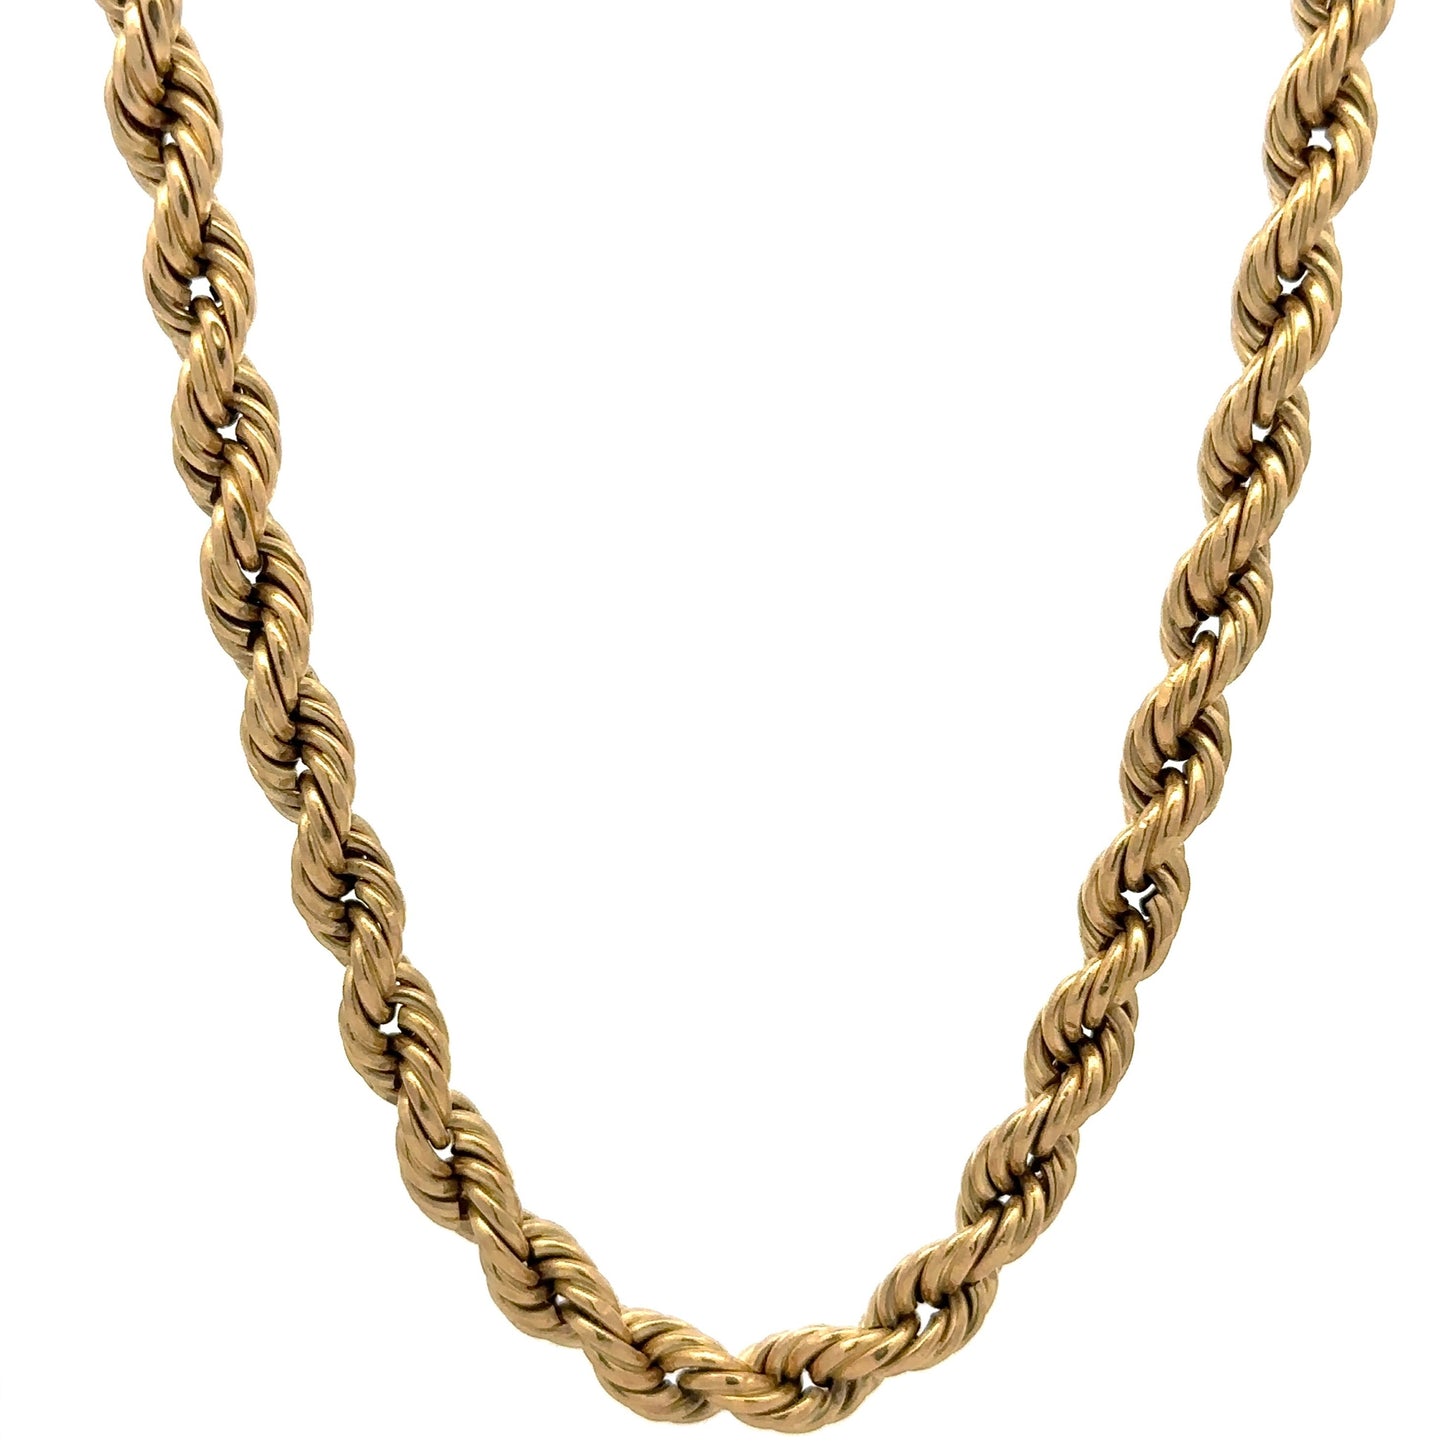 Hanging yellow gold rope chain